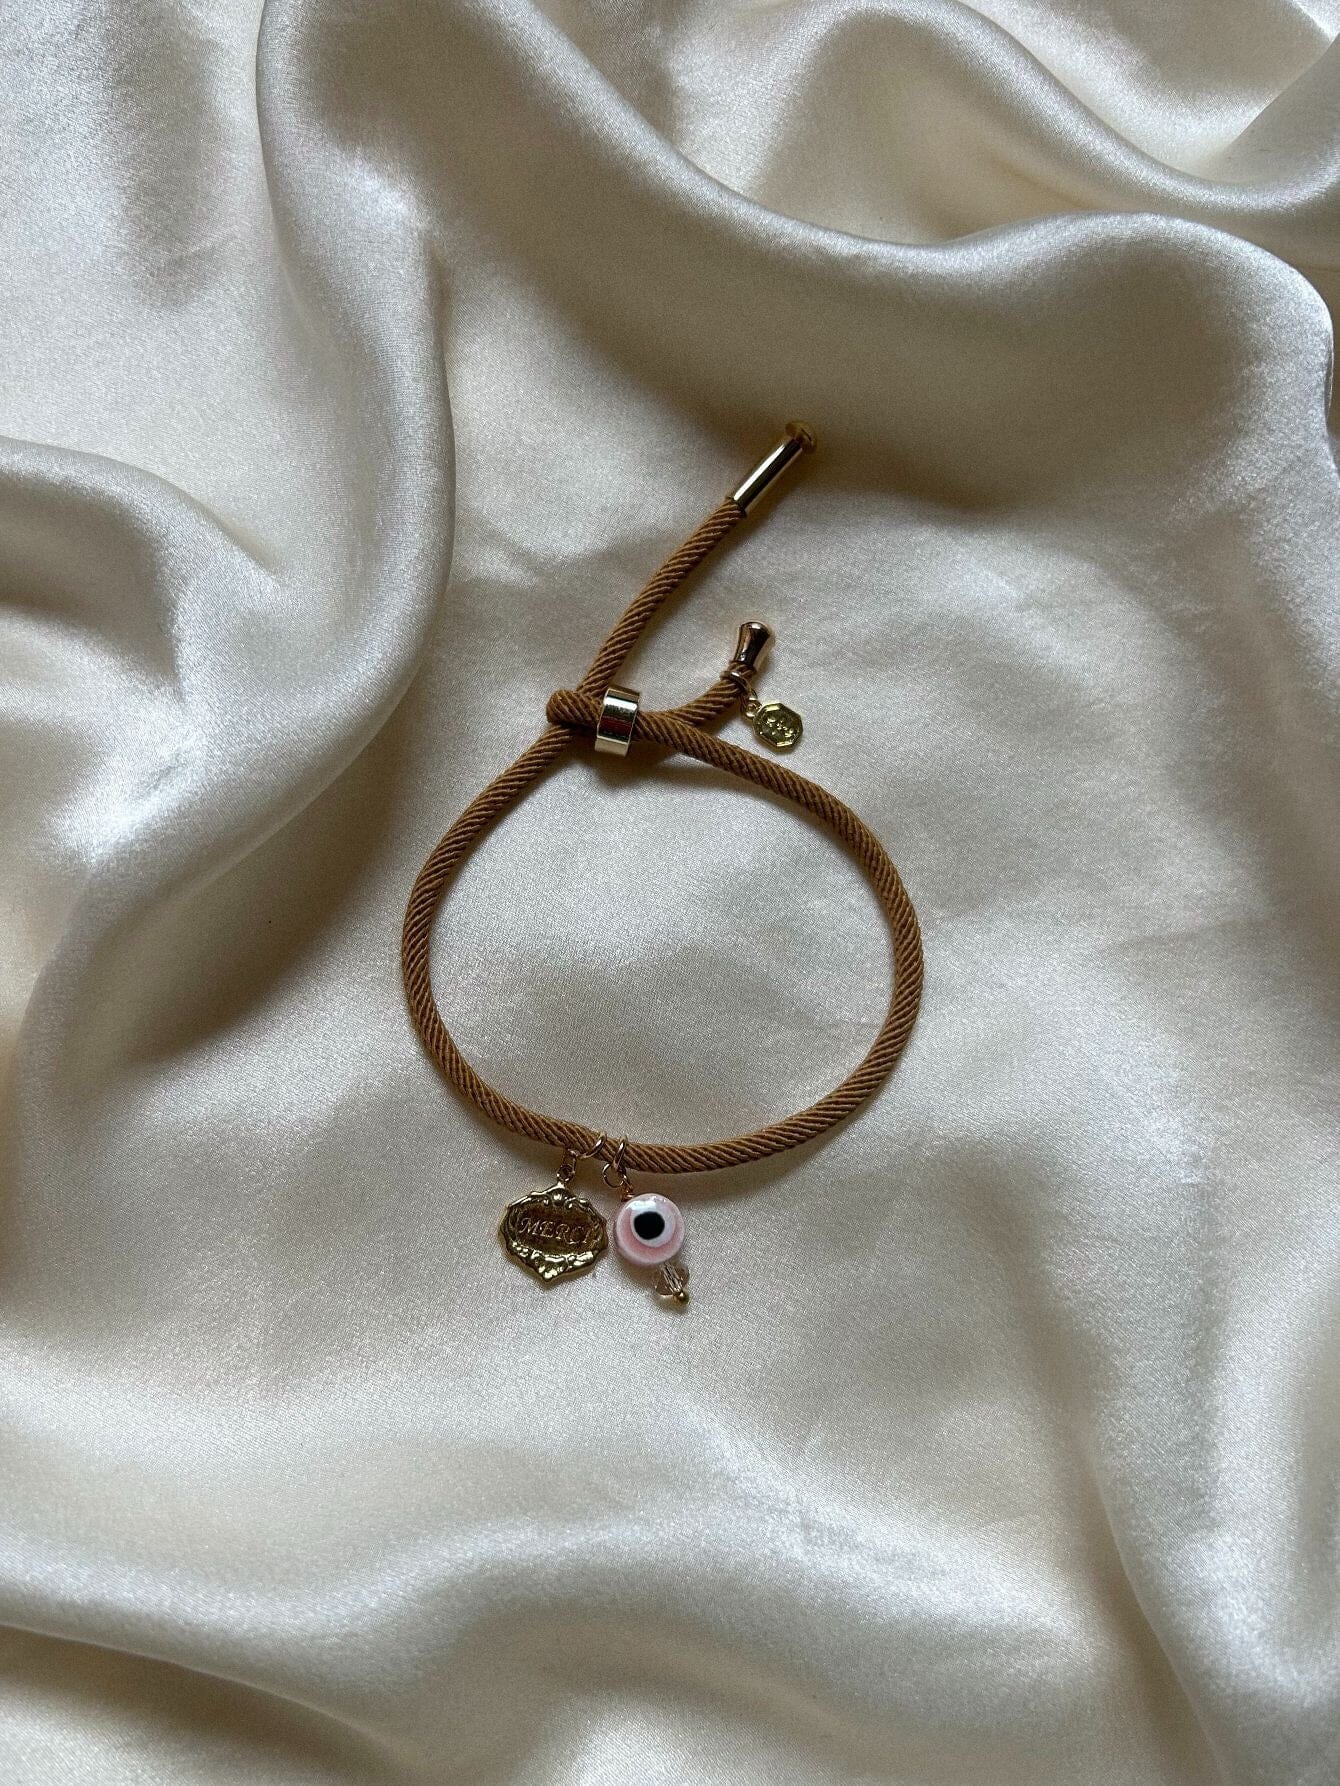  #merci #gold #bonheur #pink #bracelet #summer #été #girly #oeil #brown #bijoux #jewelry #jewellery #goodvibe #bali #pierre #perles